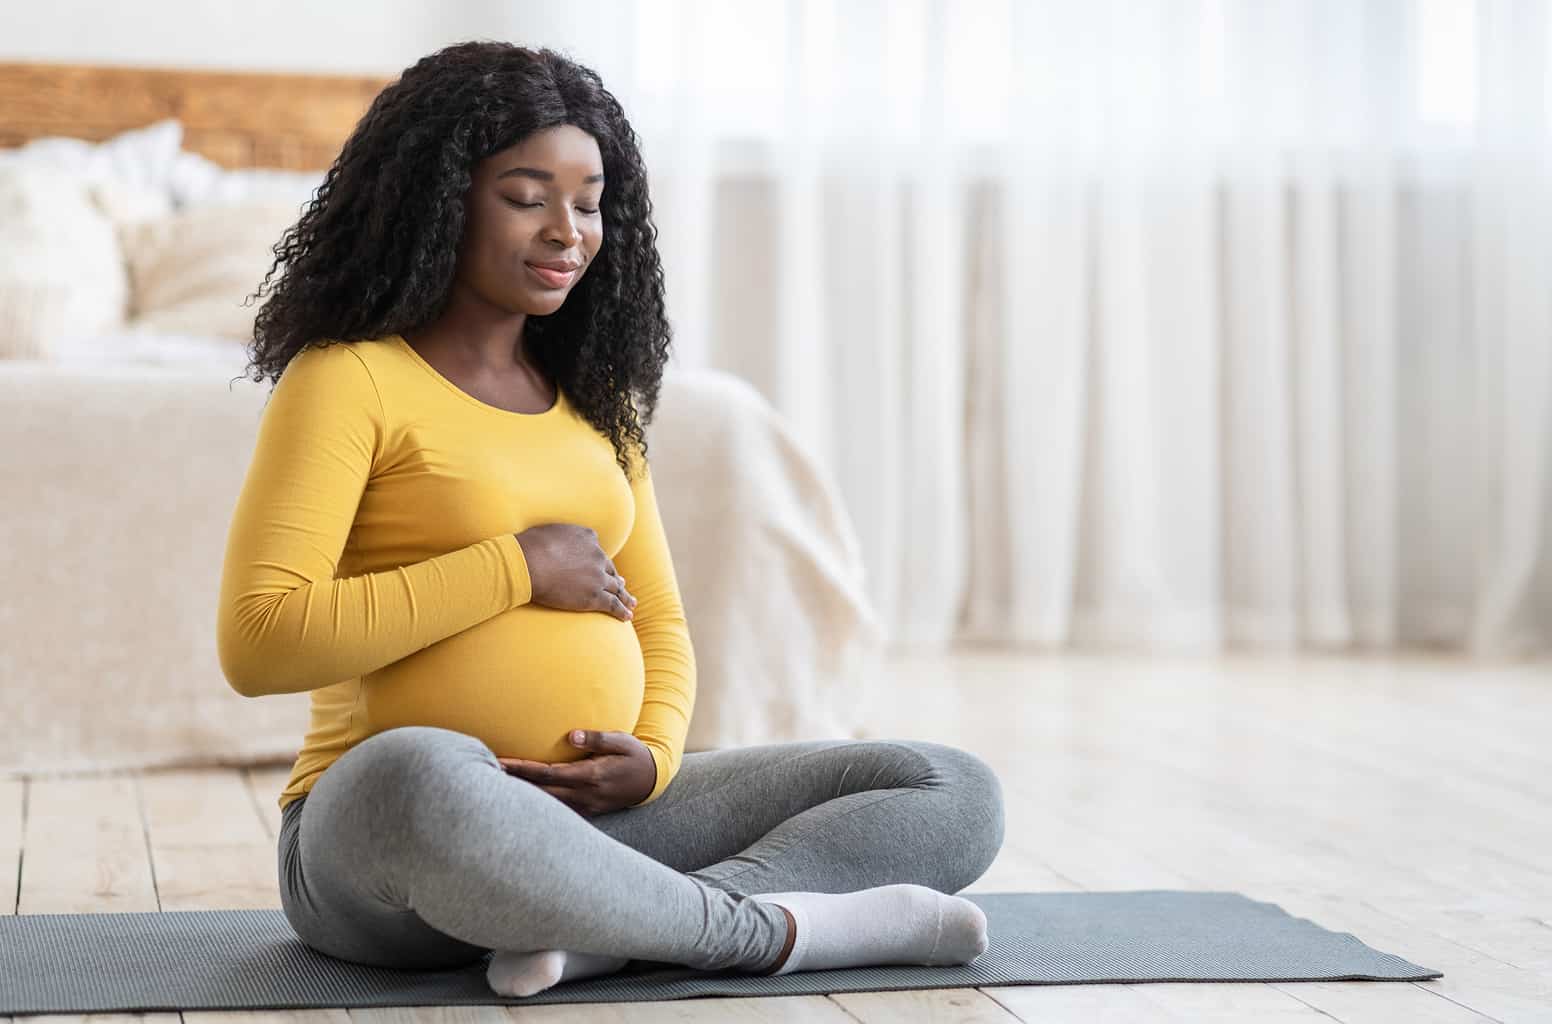 Young Pregnant Woman Sitting on Yoga Mat, pre natal care, prenatal care, prenatal health, emergency medical for pregnancy, at home prenatal care